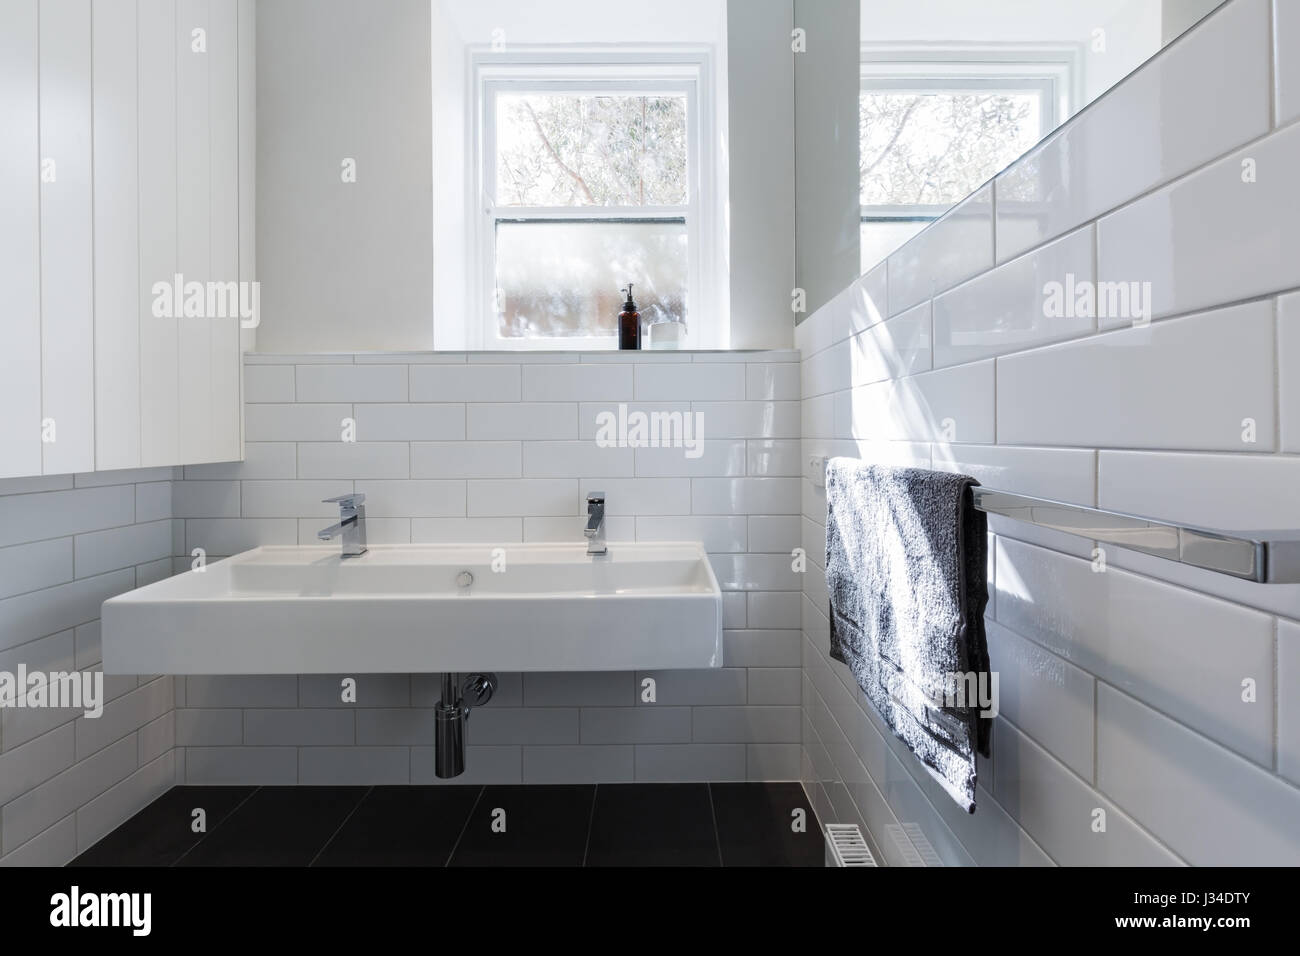 Double basin vanity in modern white renovated bathroom in heritage building horizontal Stock Photo